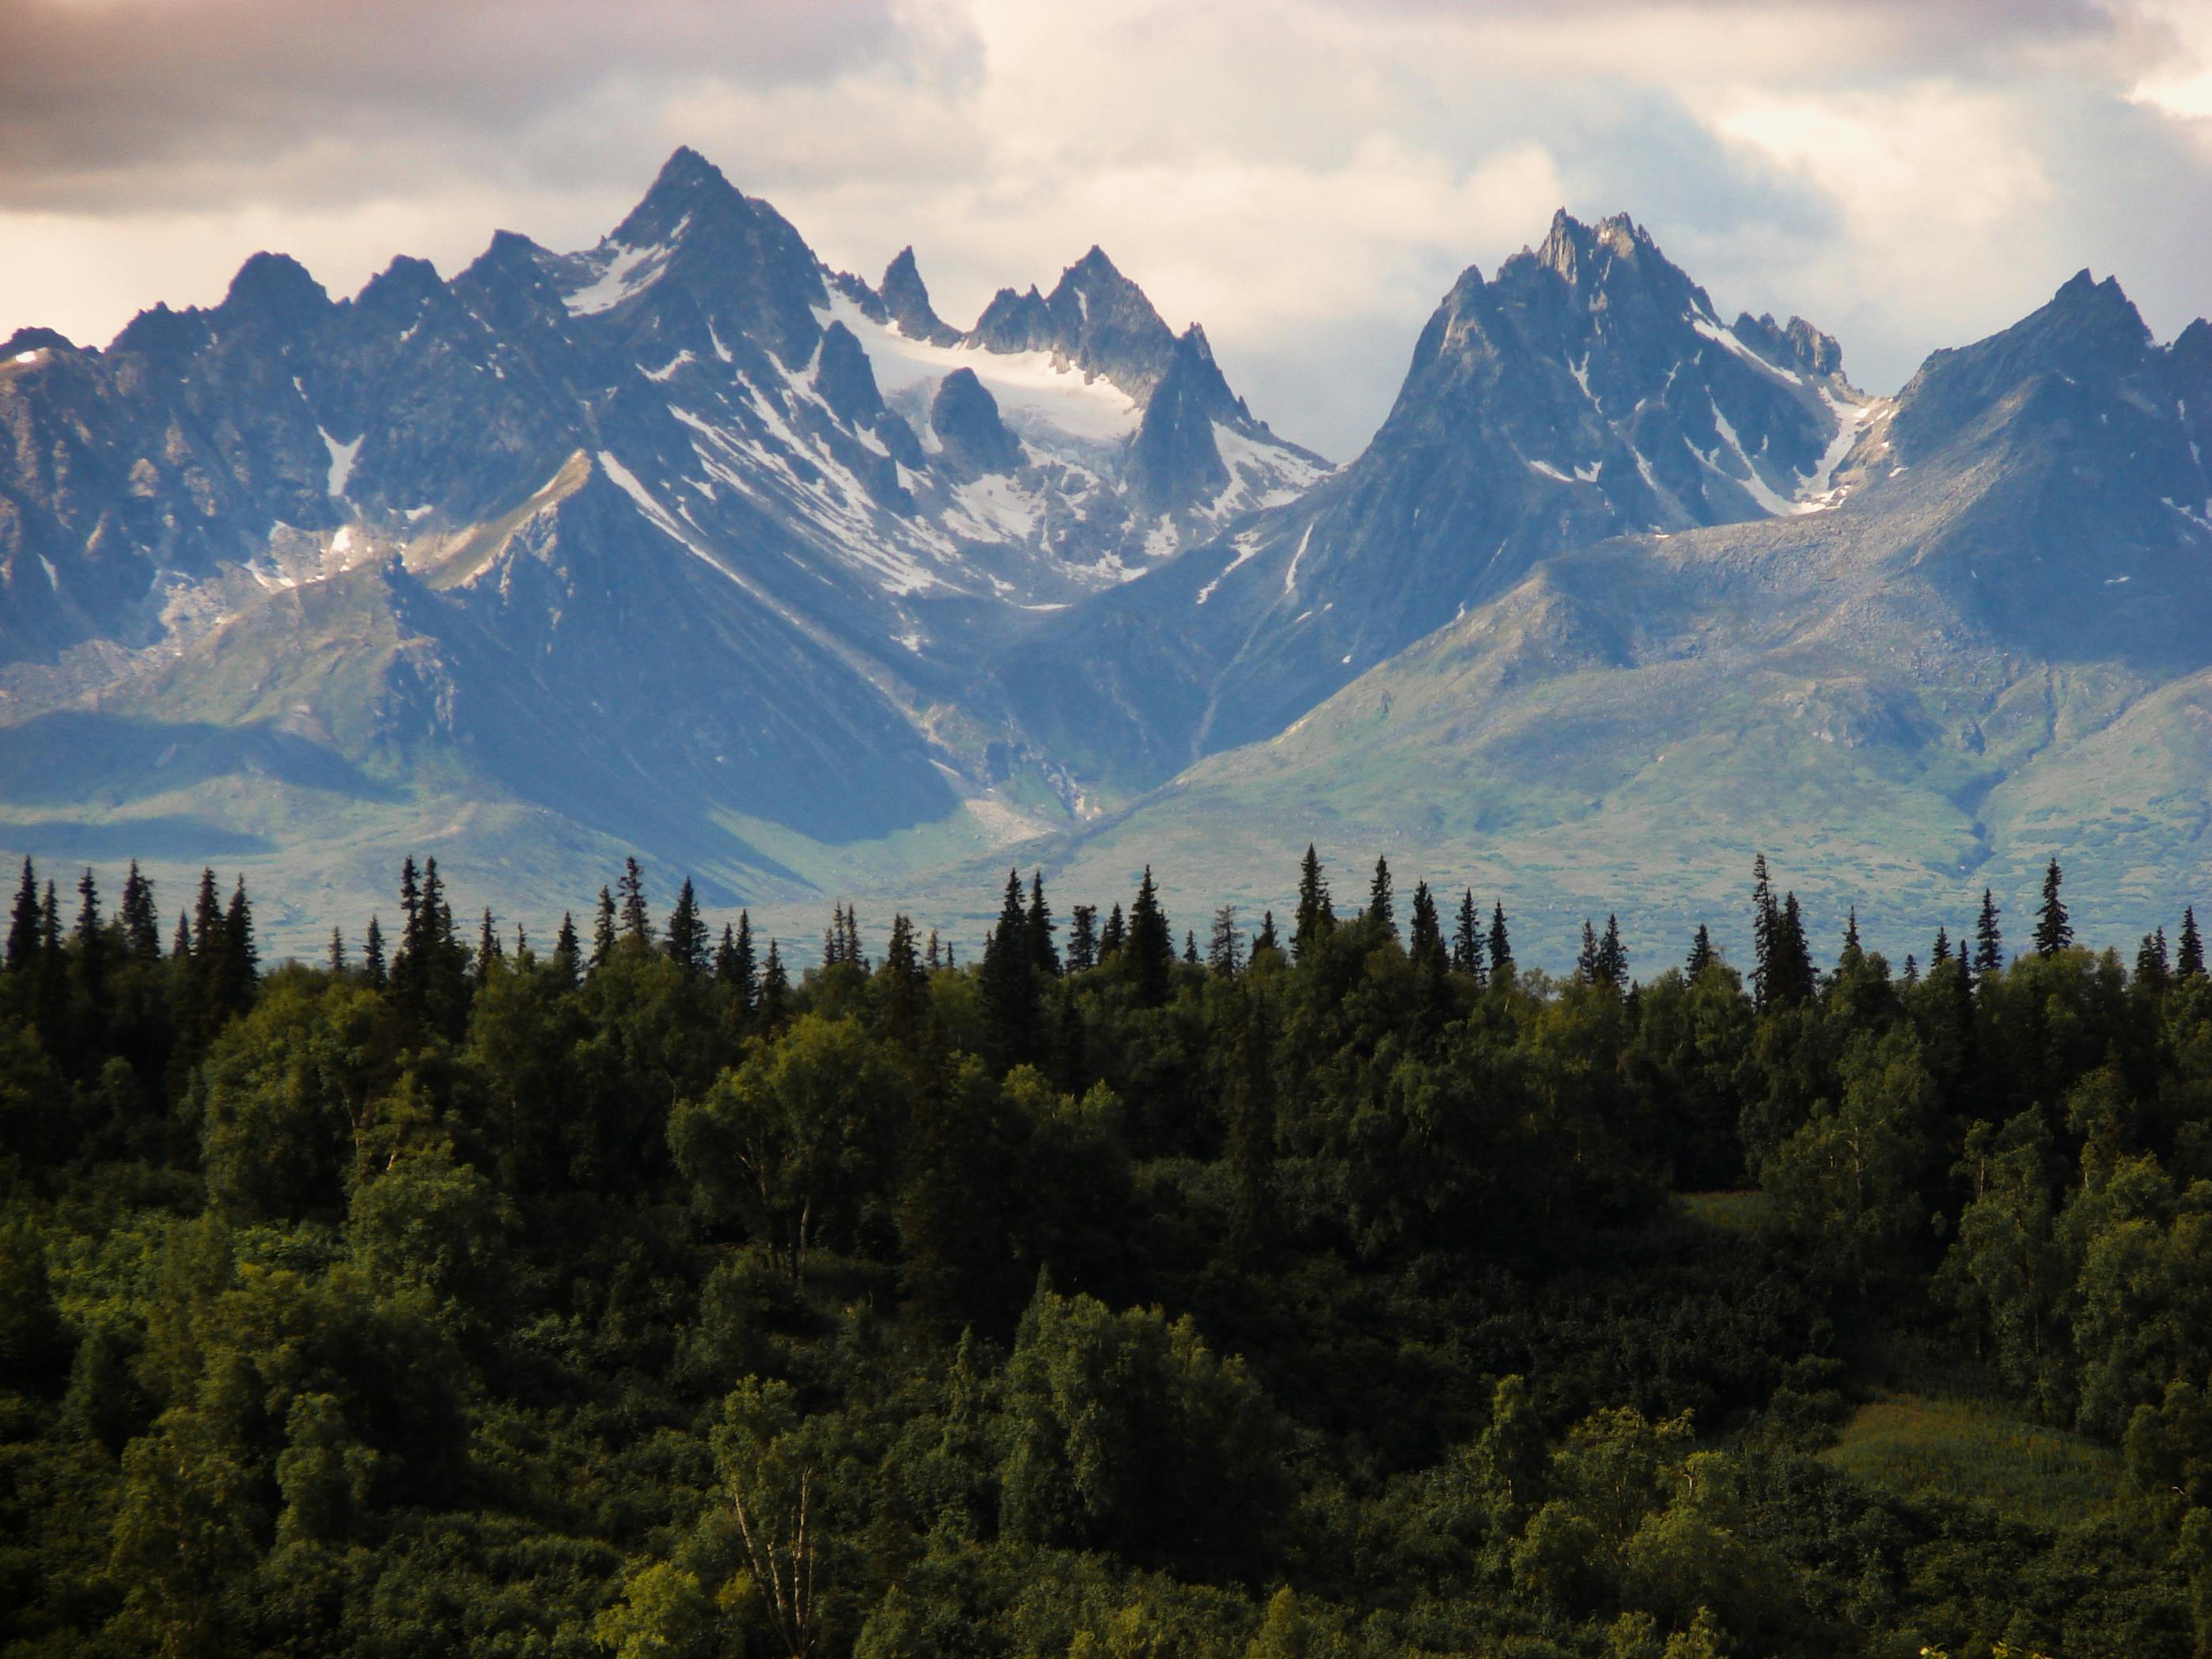 1000 Free Alaska  Nature Images  Pixabay